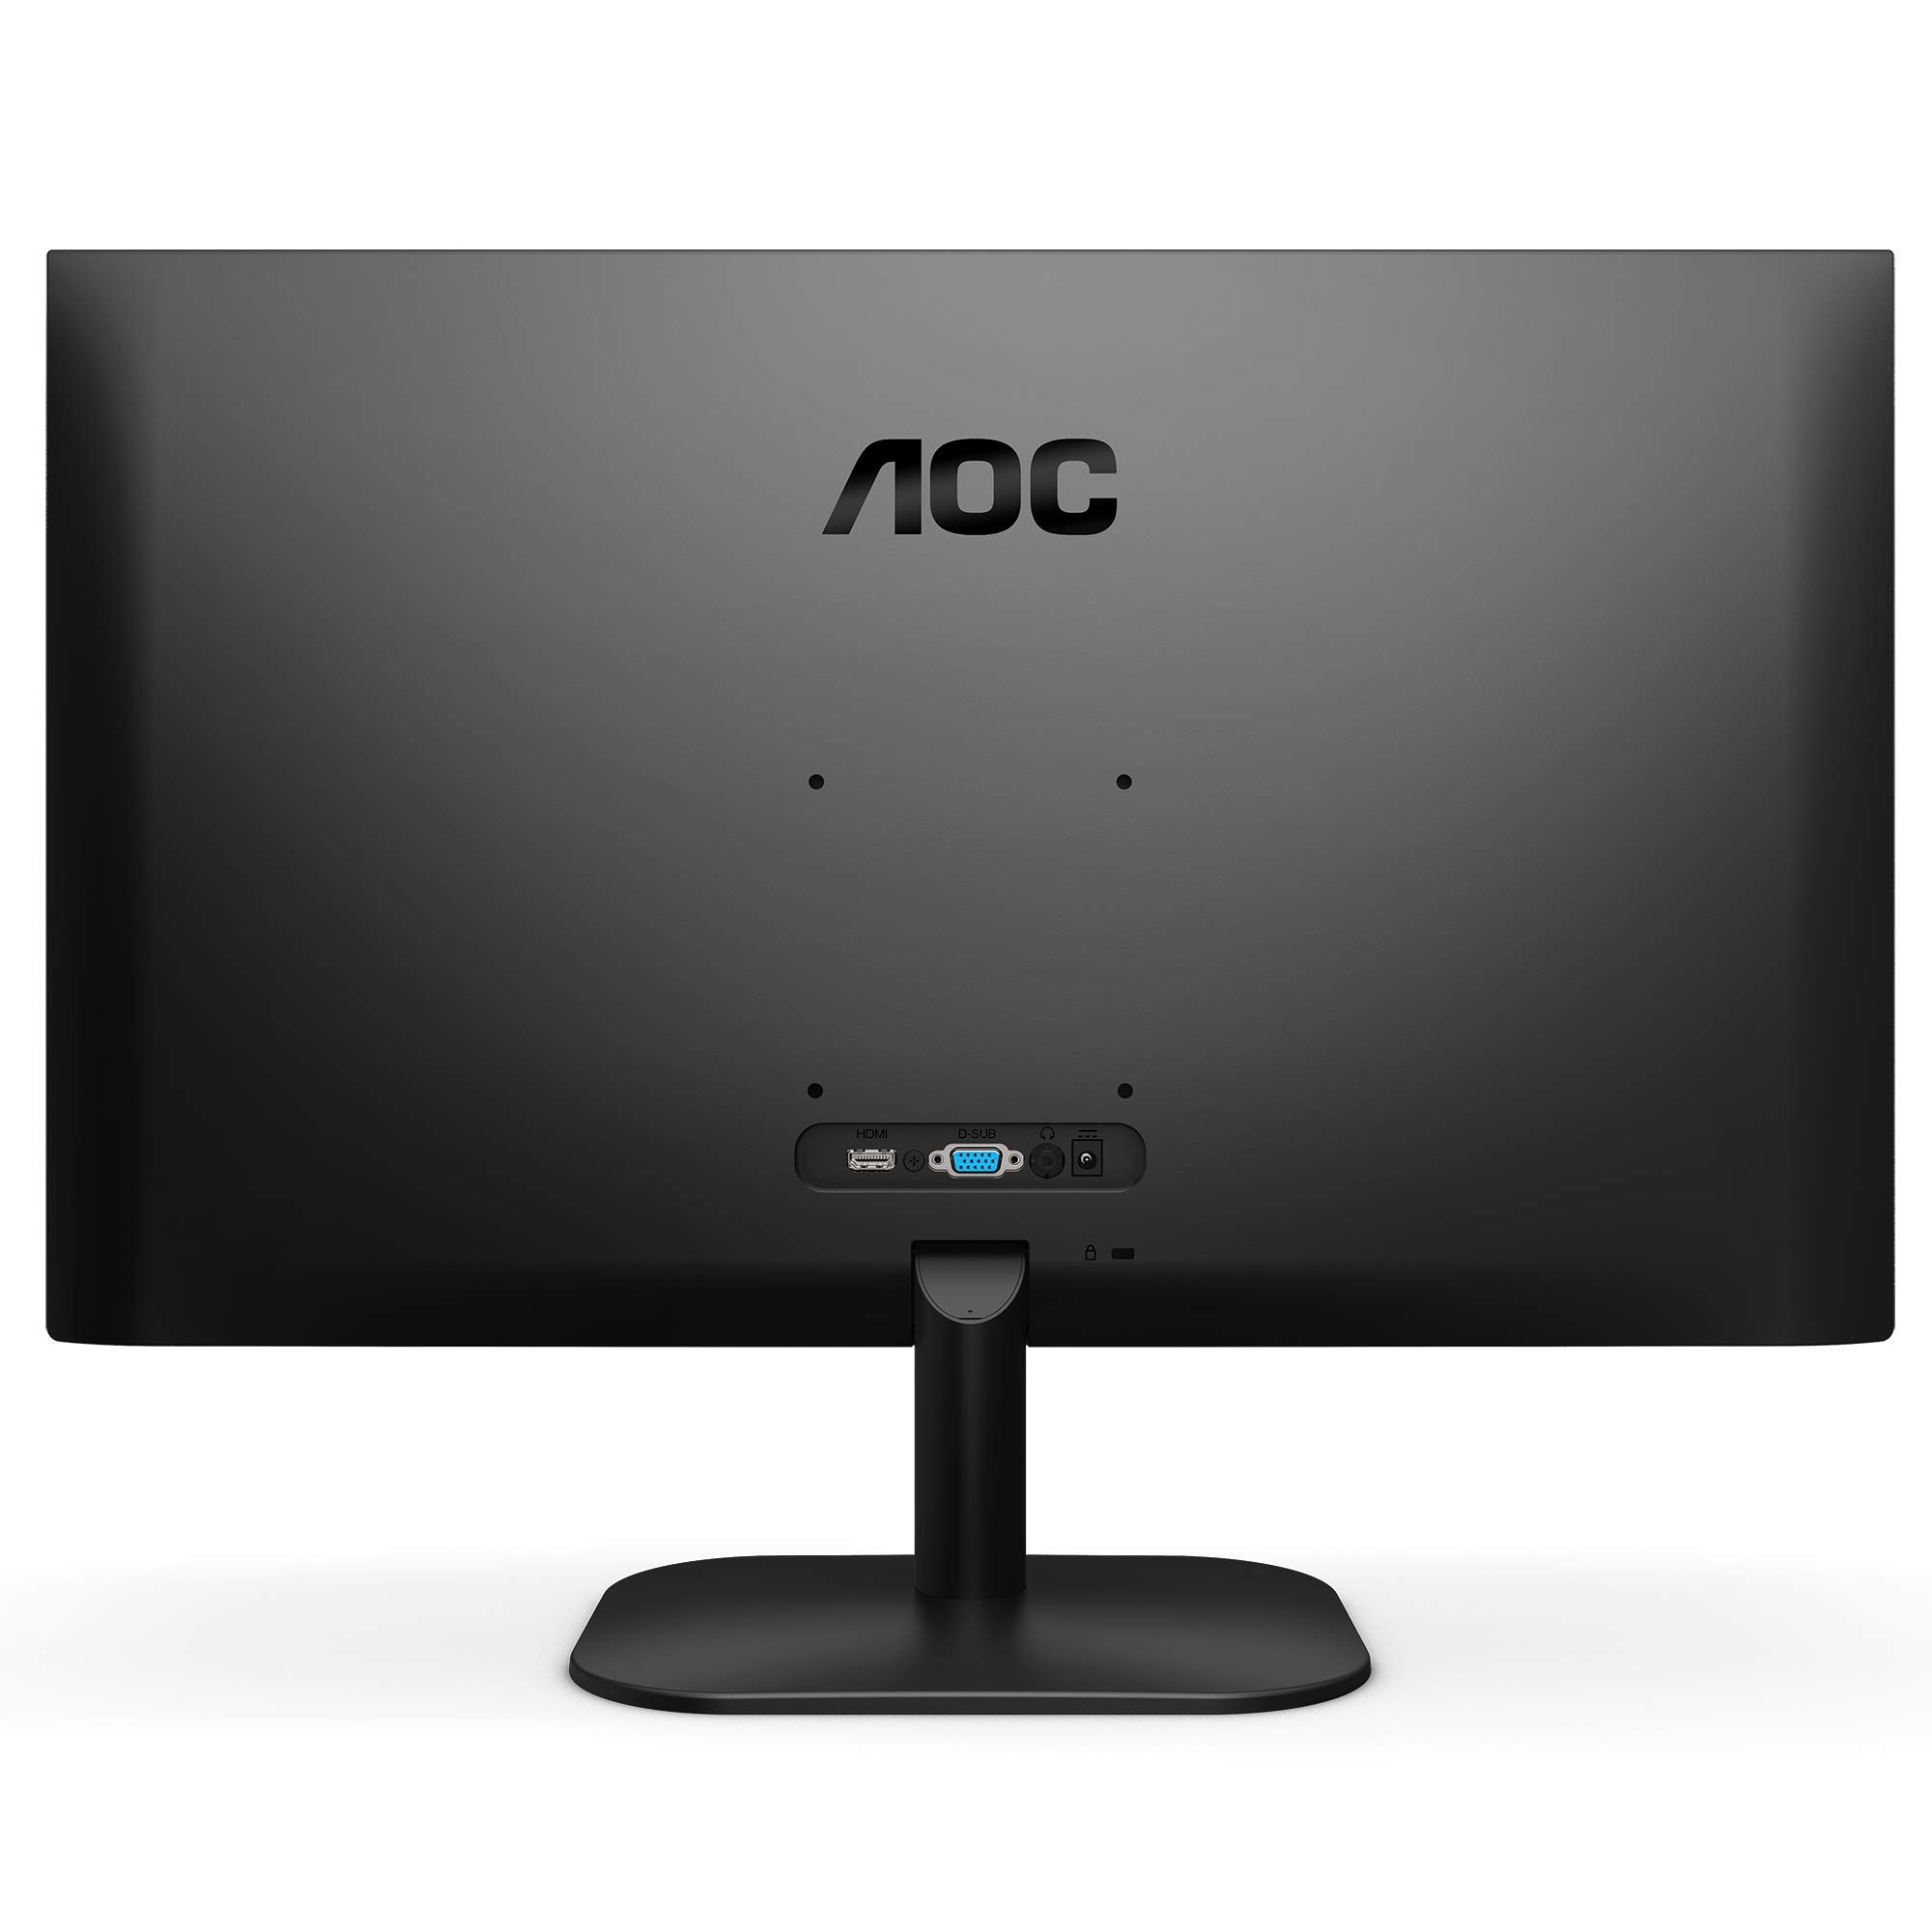 AOC 27B2DA 27 inch IPS Monitor - Full HD 1080p, 4ms Response, Built In Speakers, HDMI, DVI